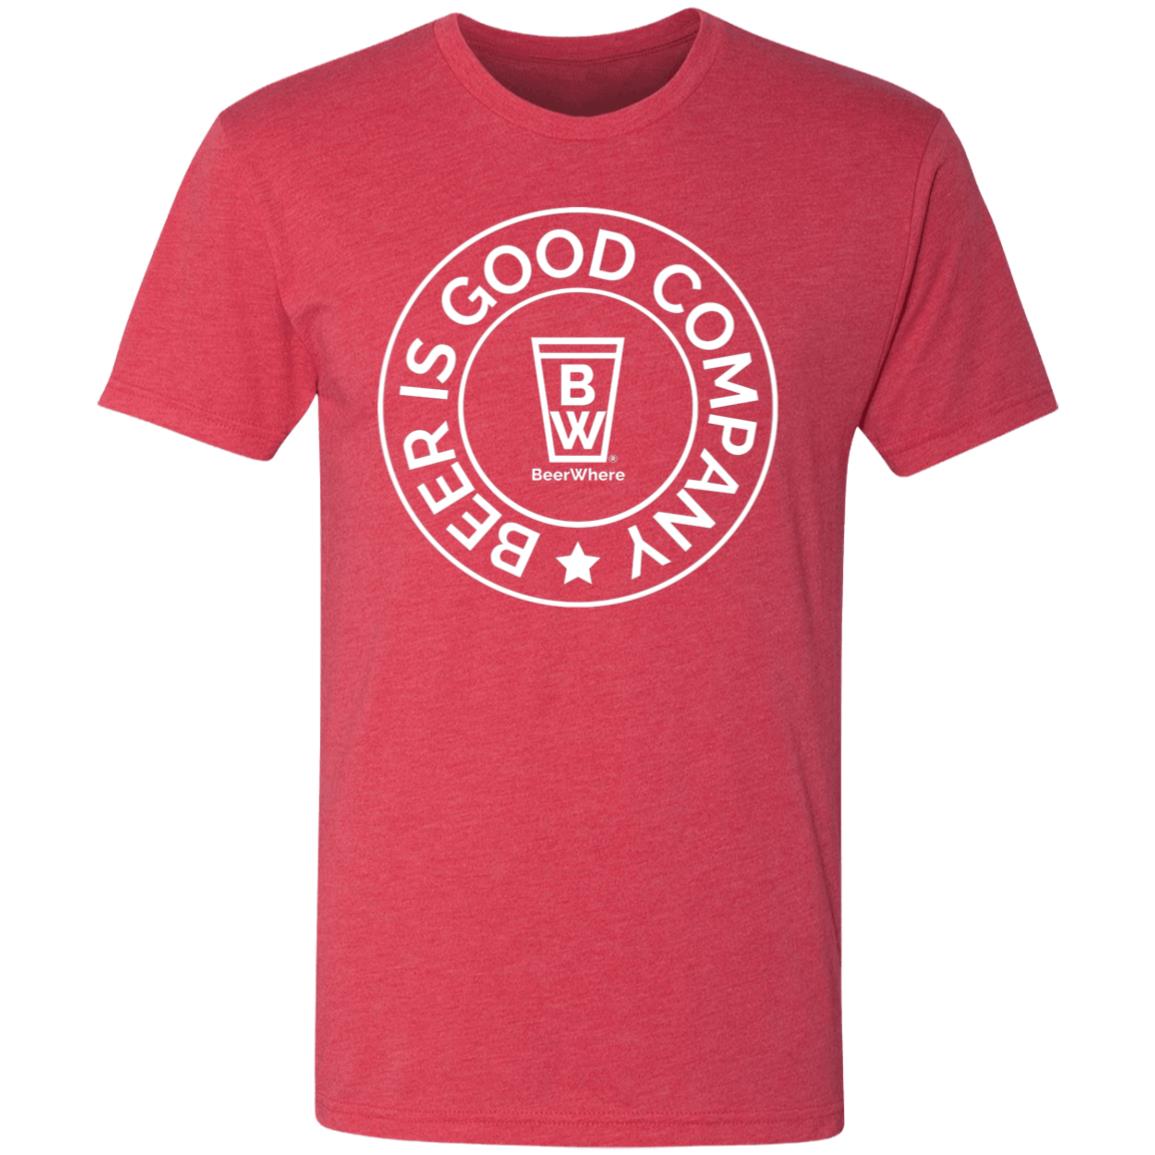 Good Company Men's Triblend T-Shirt